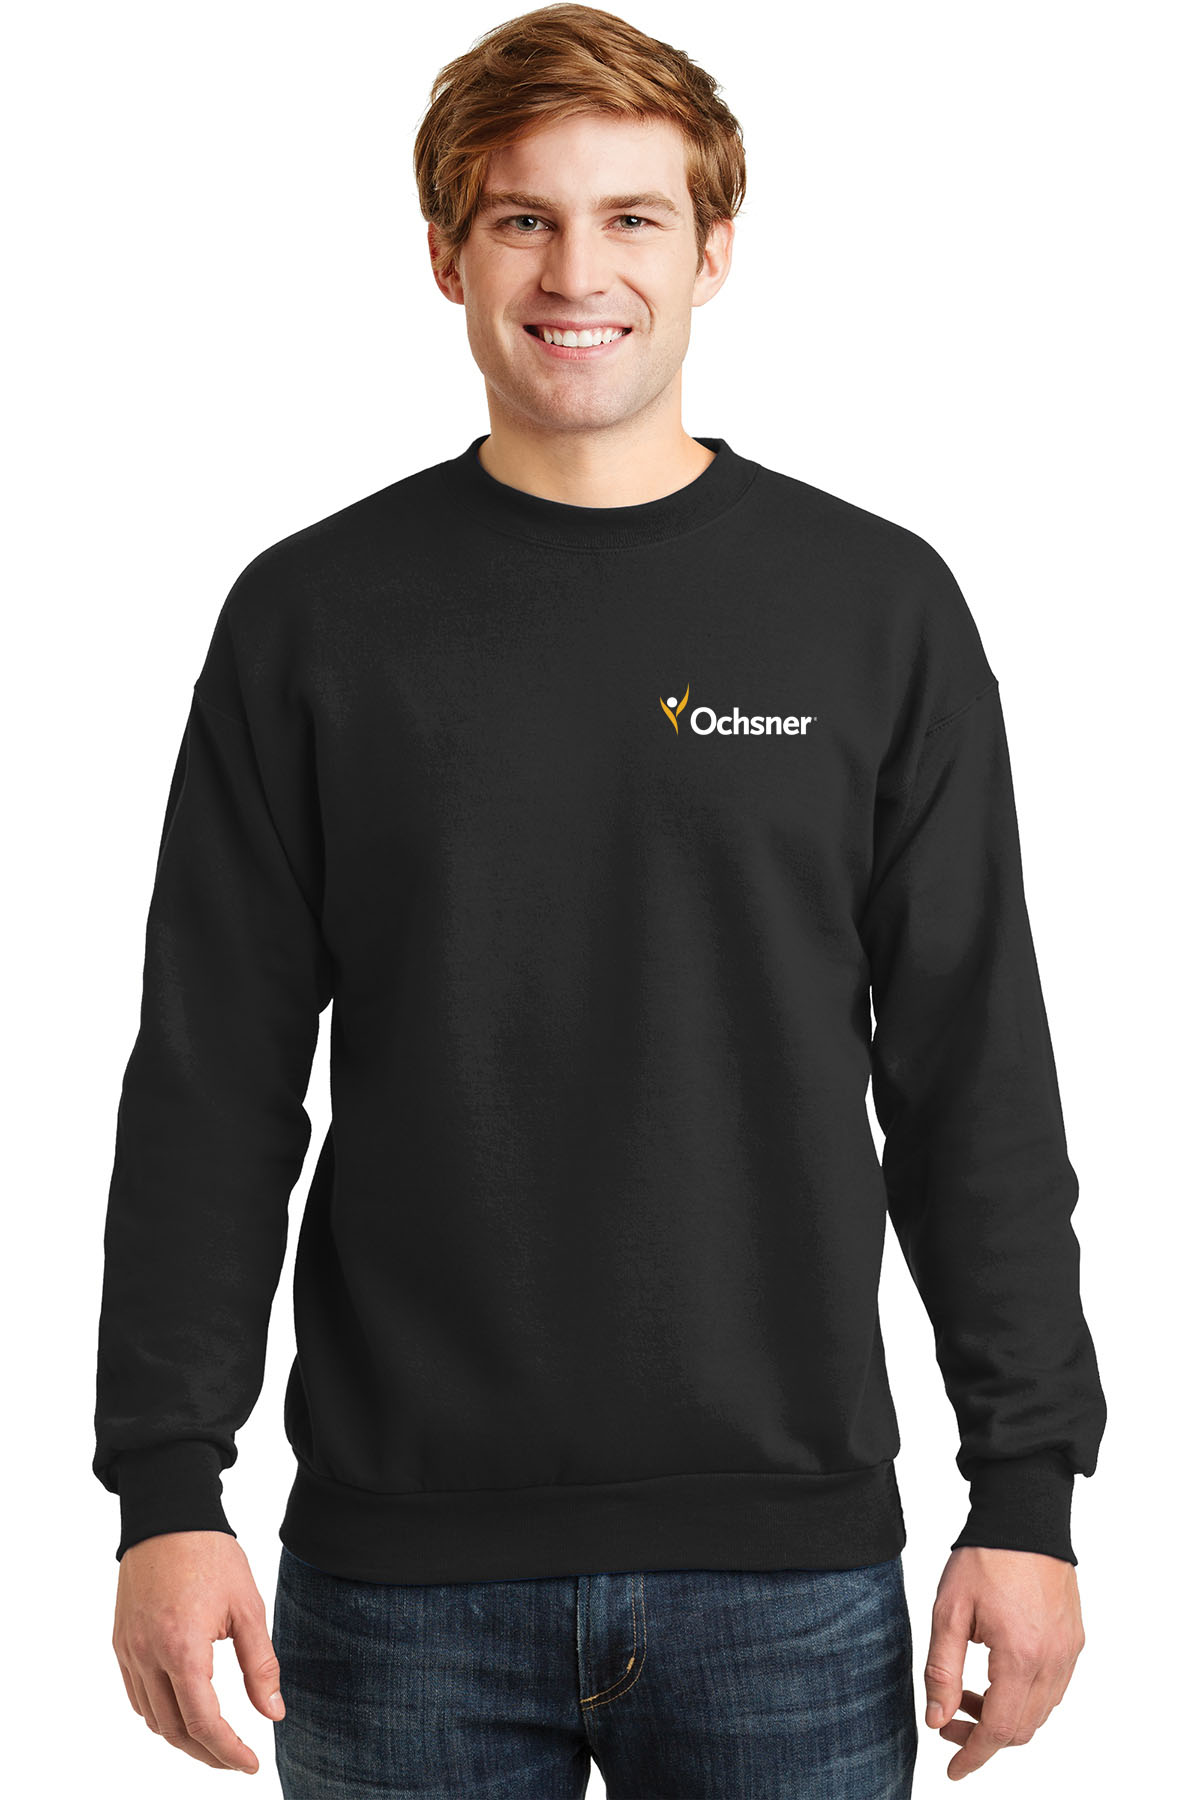 Hanes Unisex Ecosmart Sweatshirt, , large image number 1